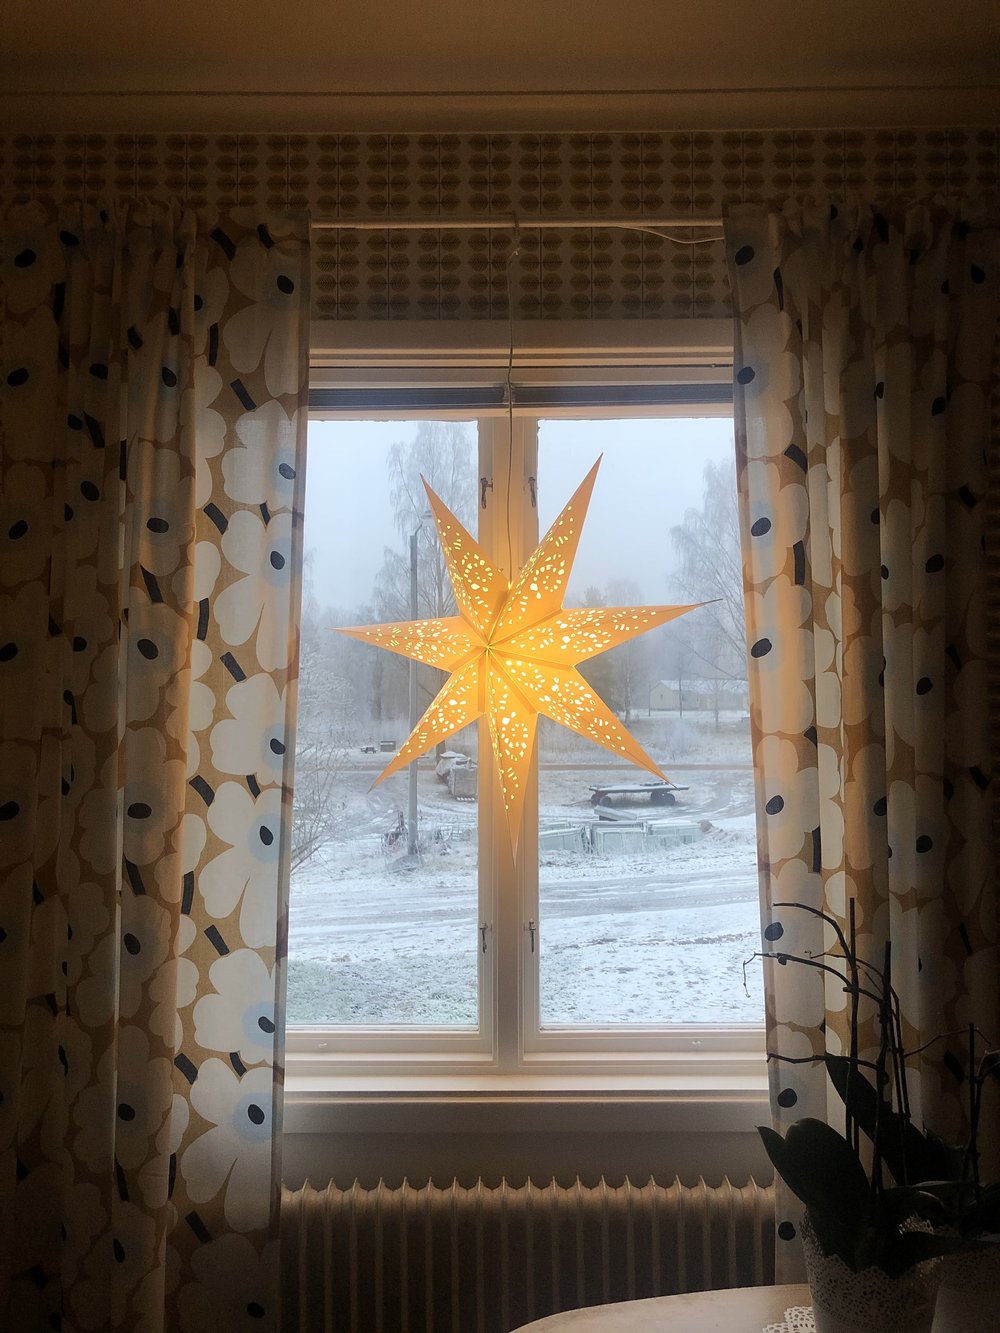 A festive star hanging in Nadia's window. Photo: Nadia Henderson